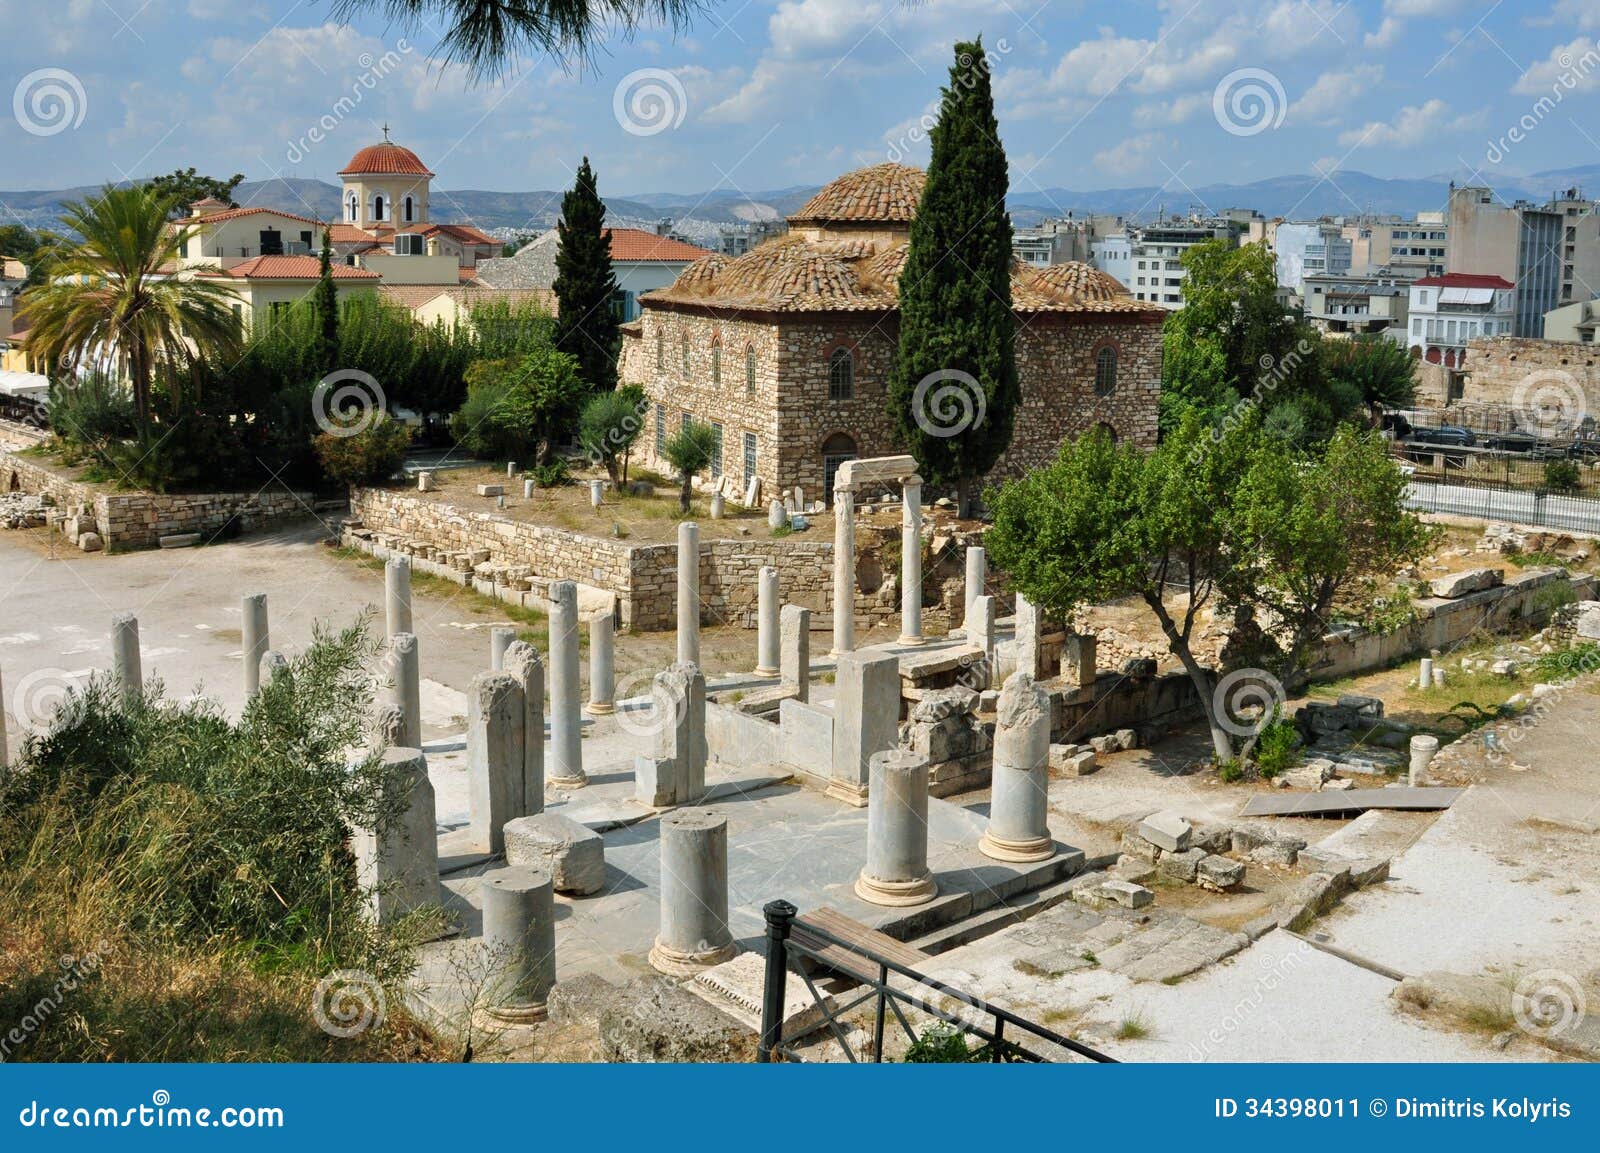 fethiye mosque roman forum